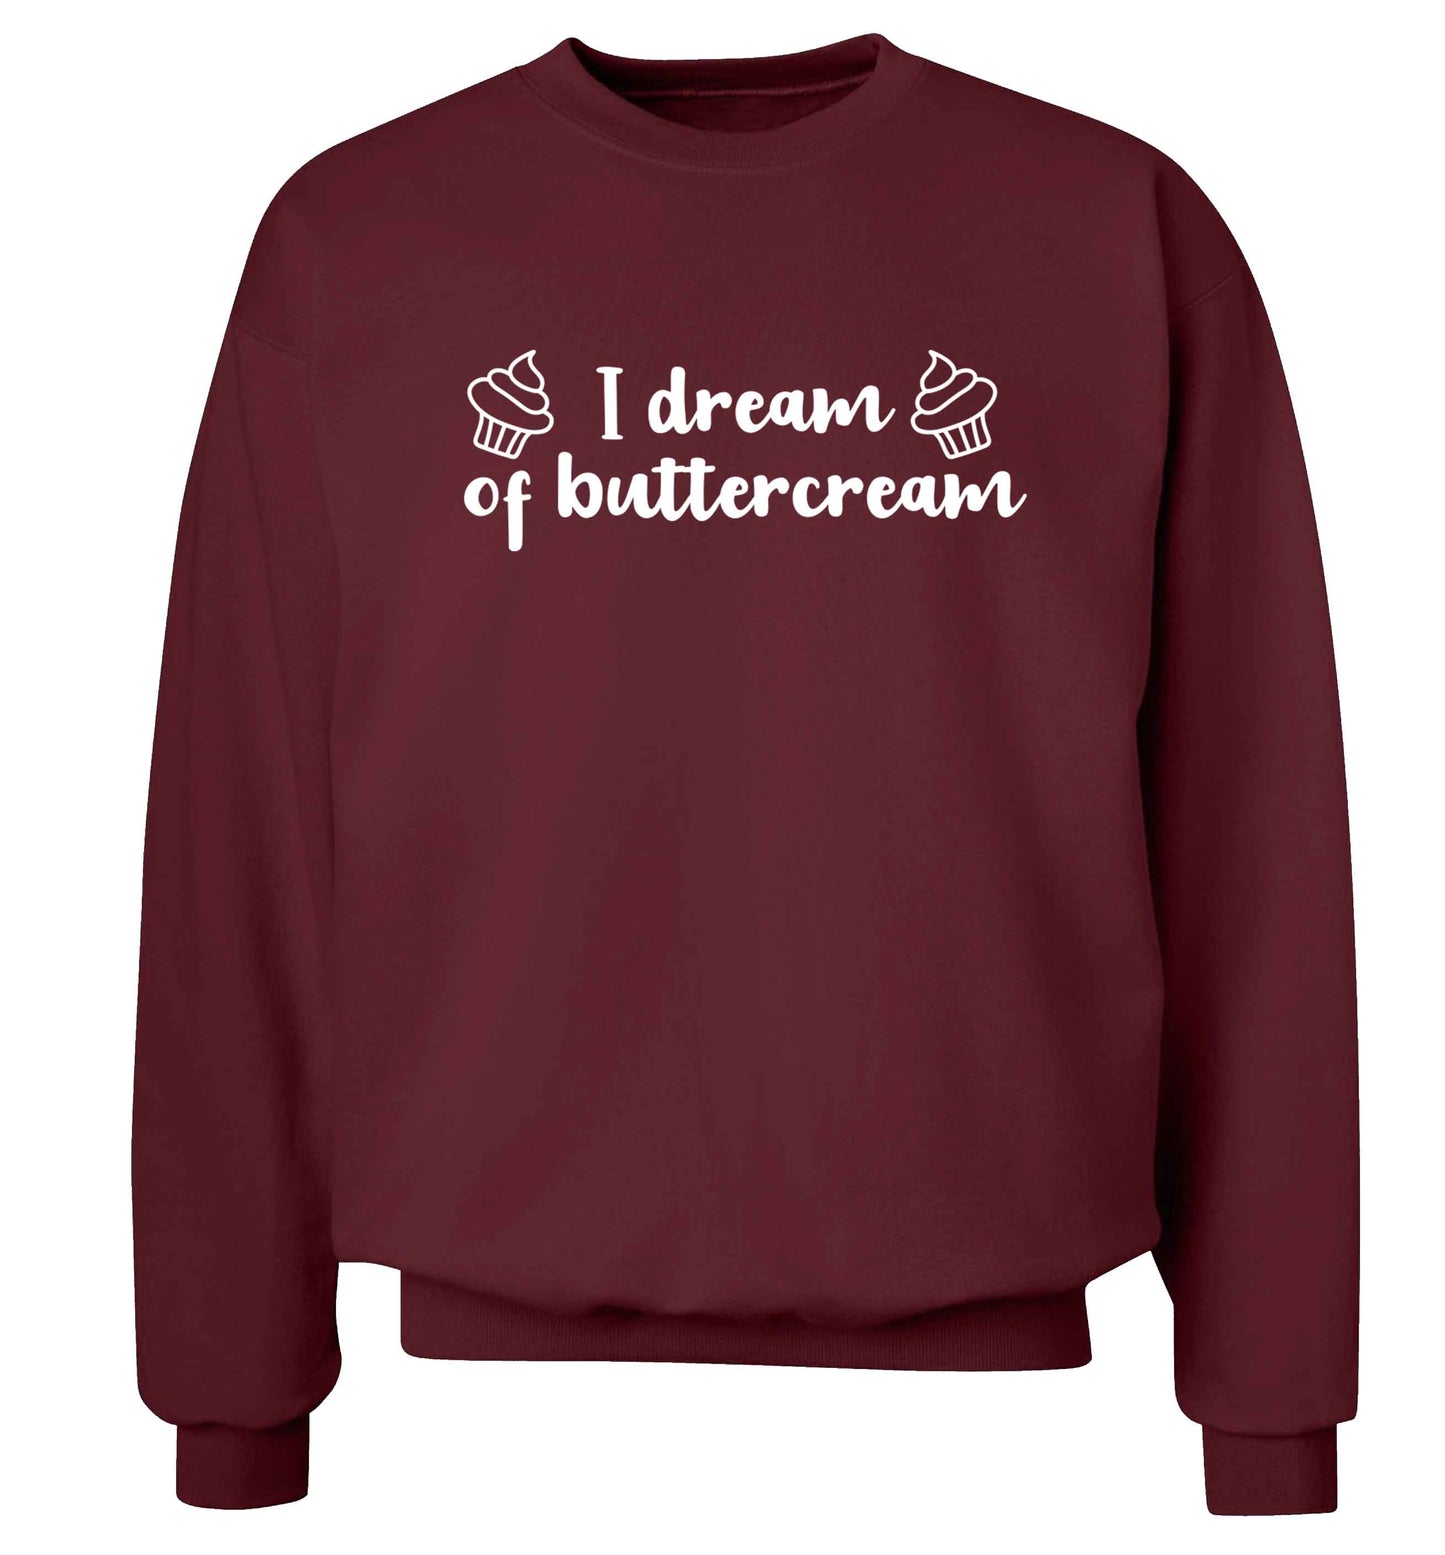 I dream of buttercream Adult's unisex maroon Sweater 2XL